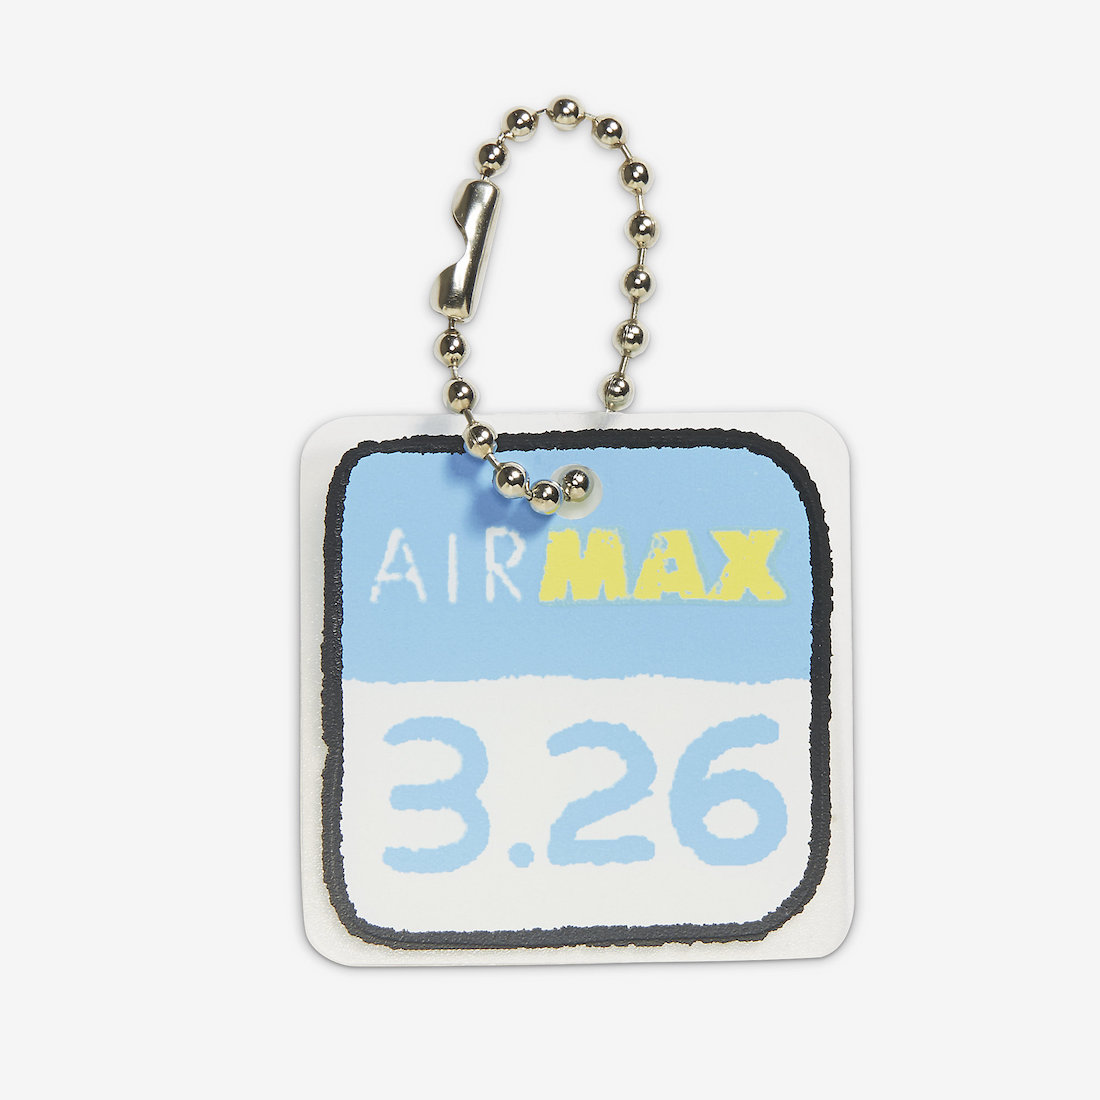 Nike Air Max Scorpion Air Max Day FJ6032-910 Release Date